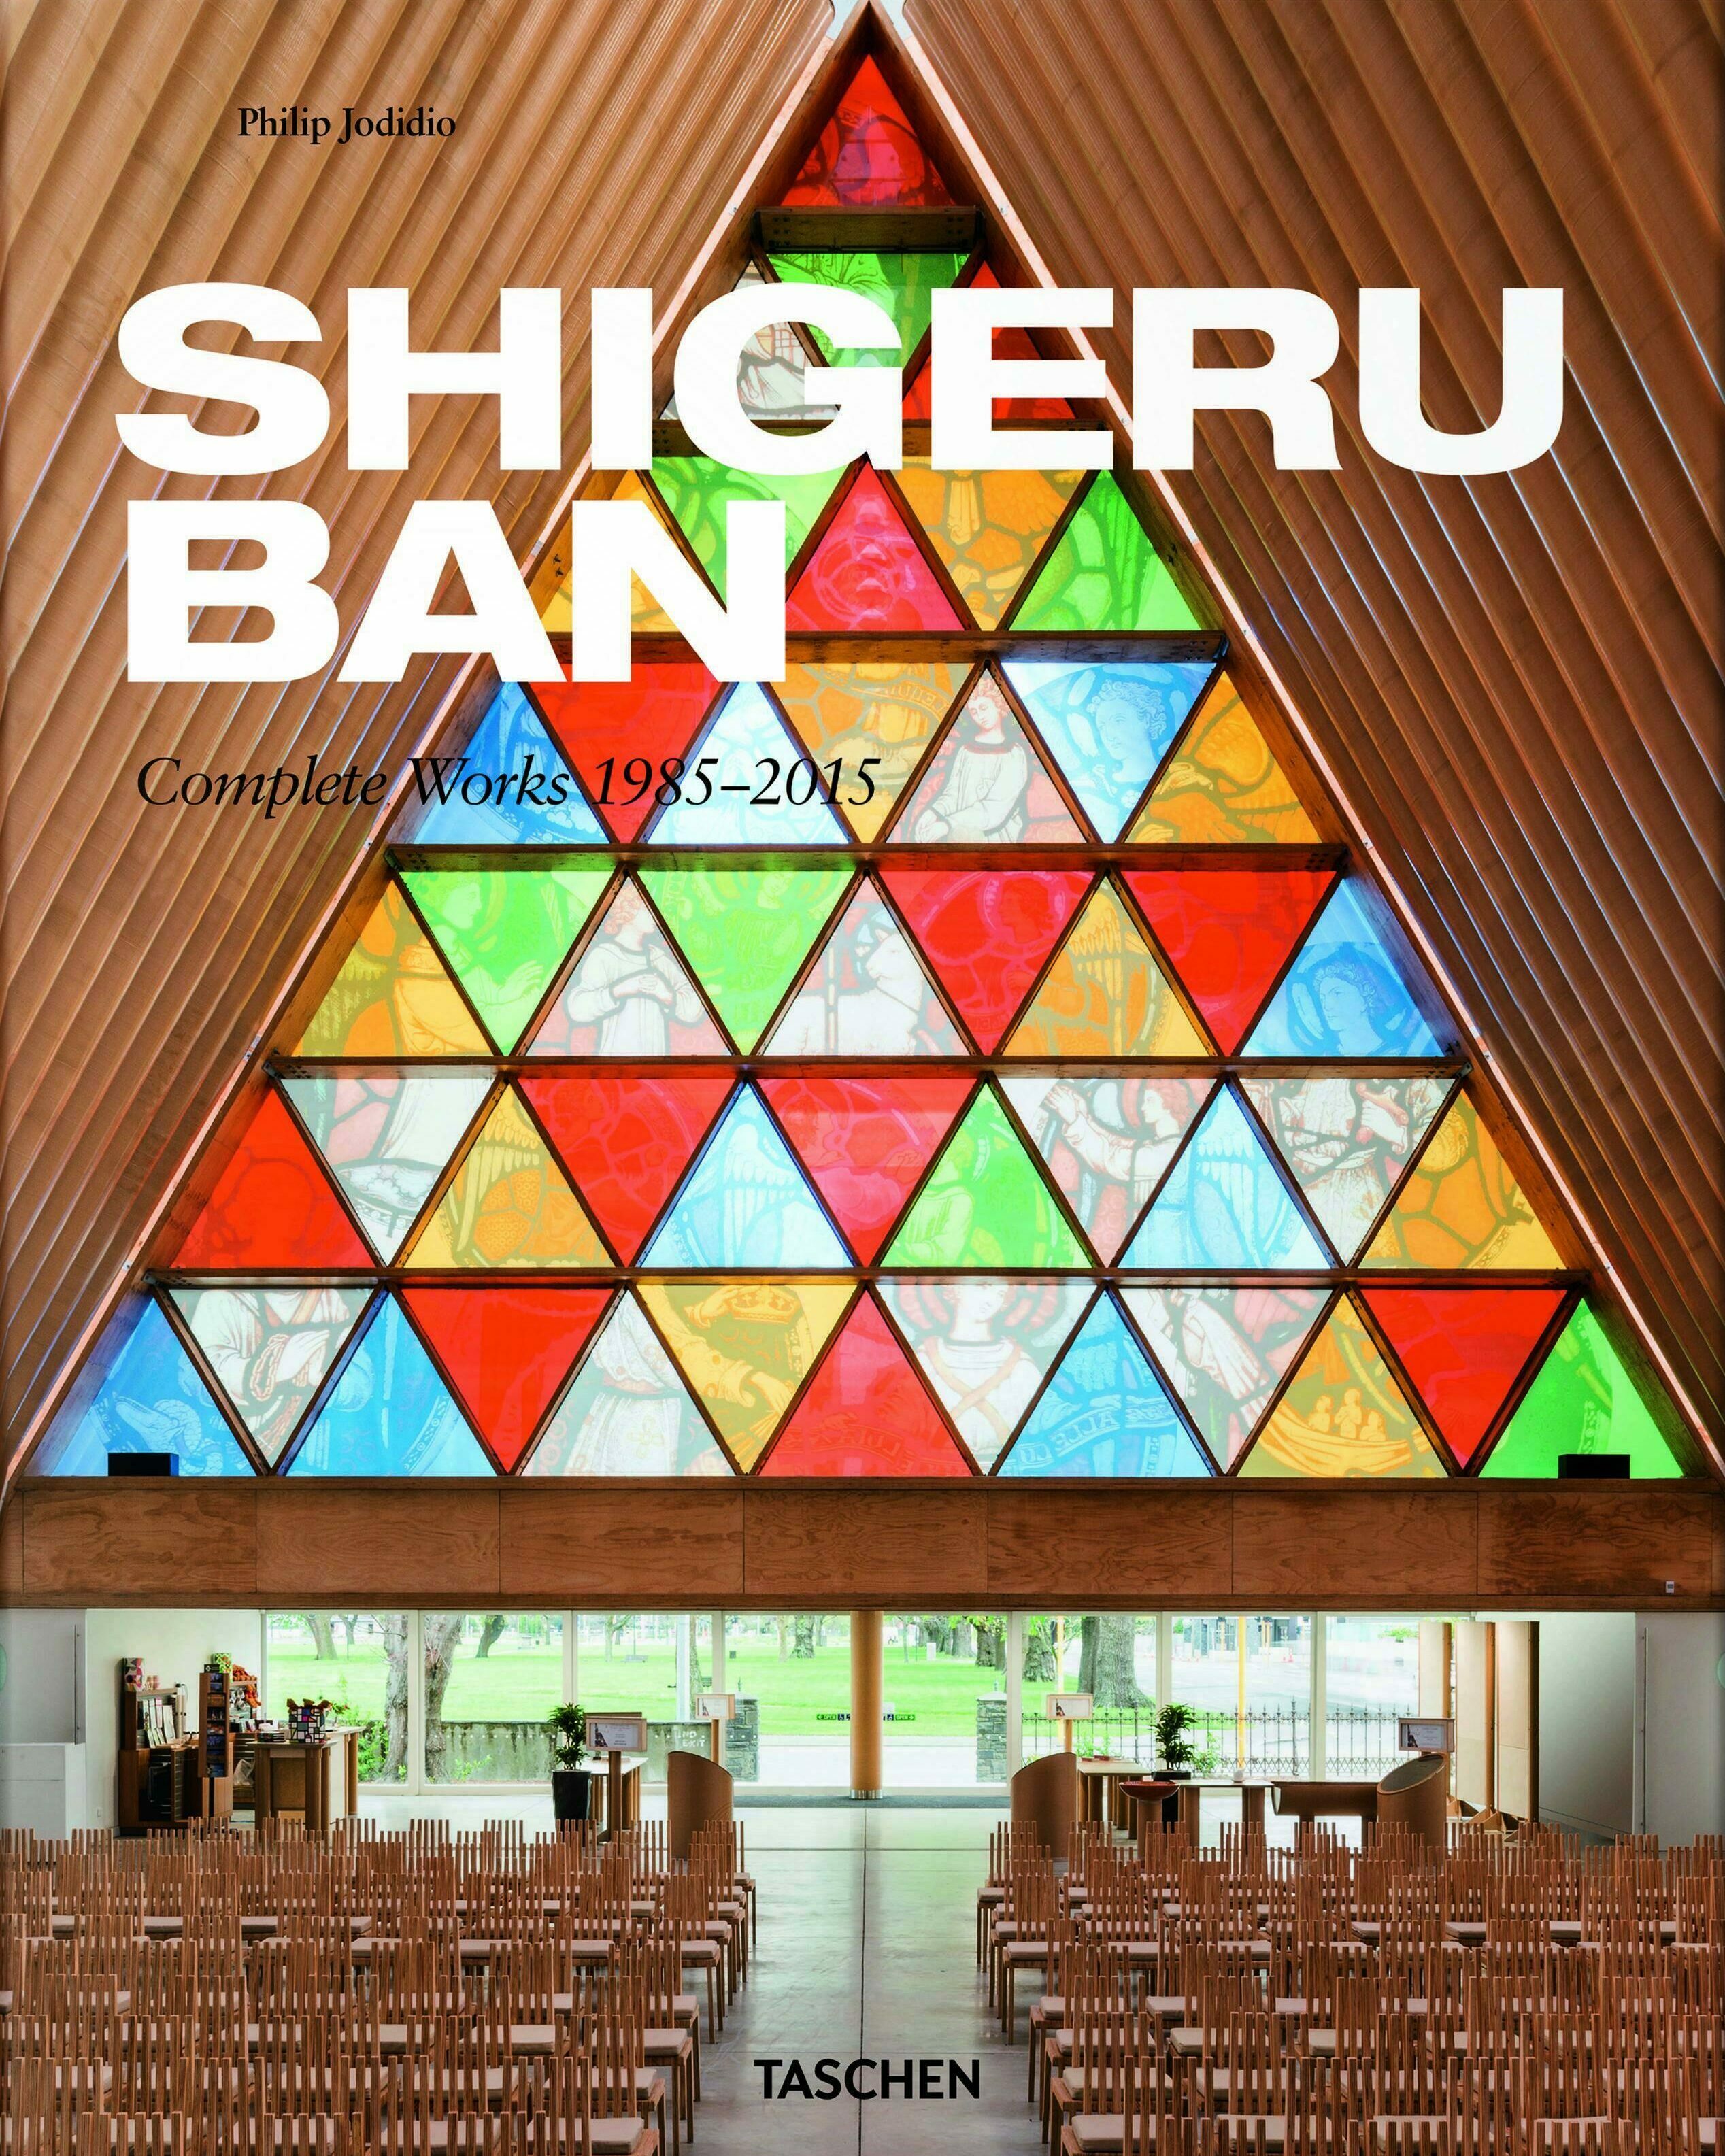 shigeru ban. complete works 1985 – 2015, Philip Jodidio, kunstbuch bildband fotobuch